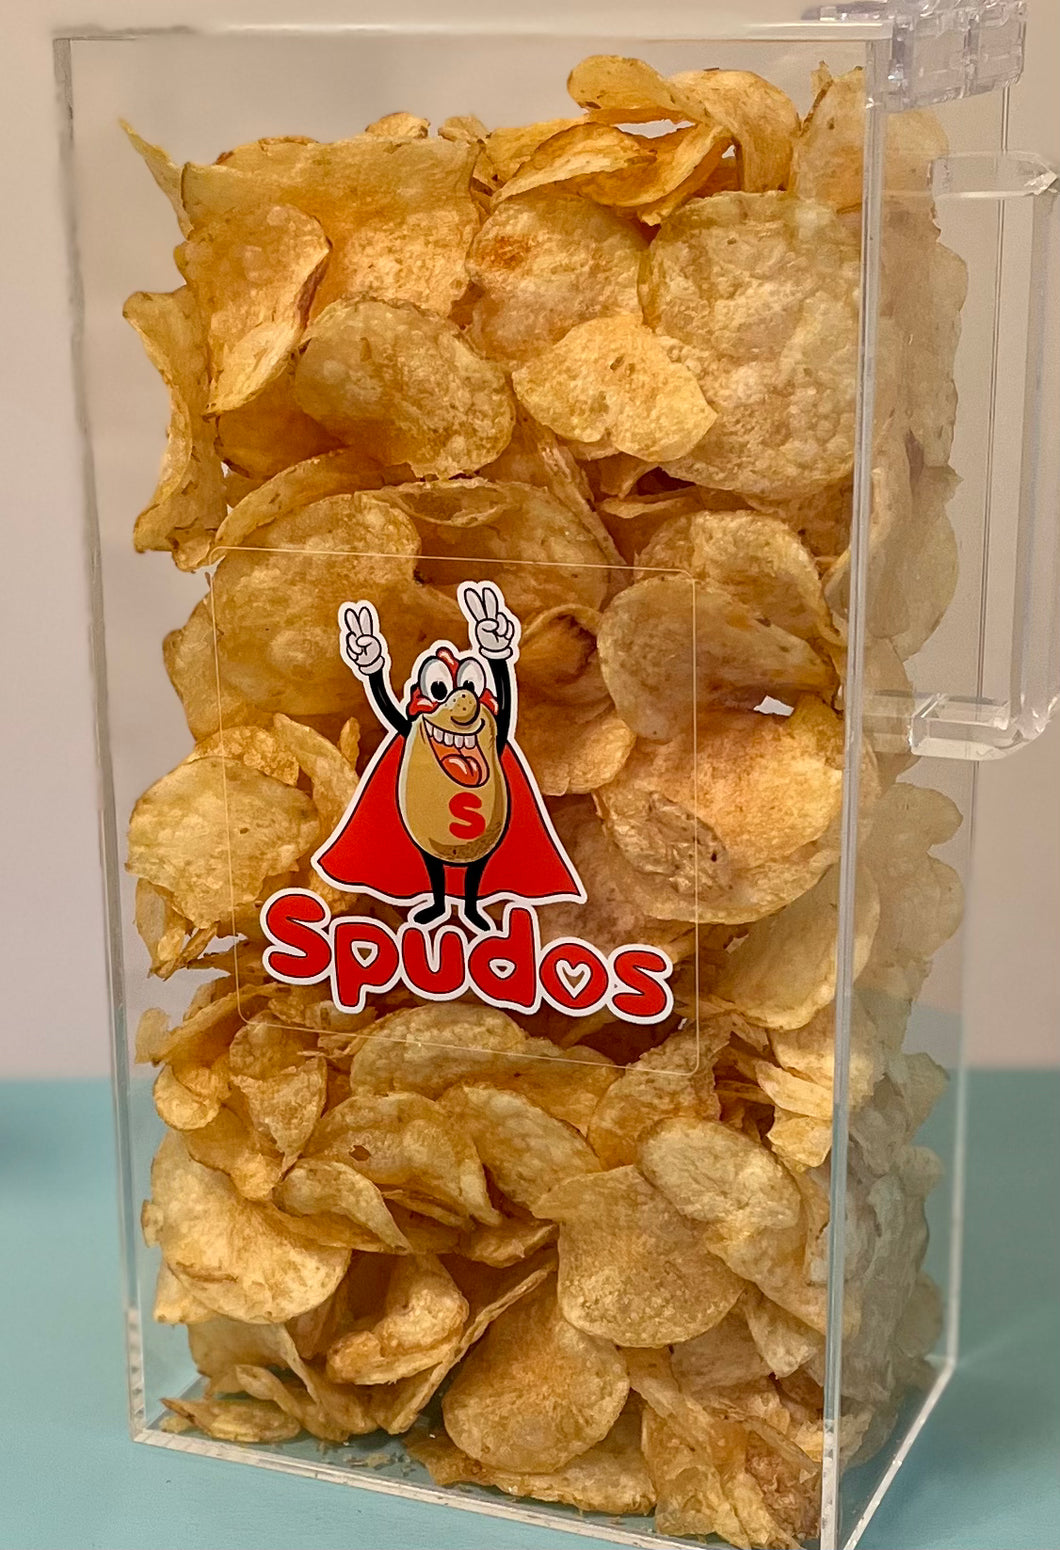 Custom Crisps by Spudos -100g